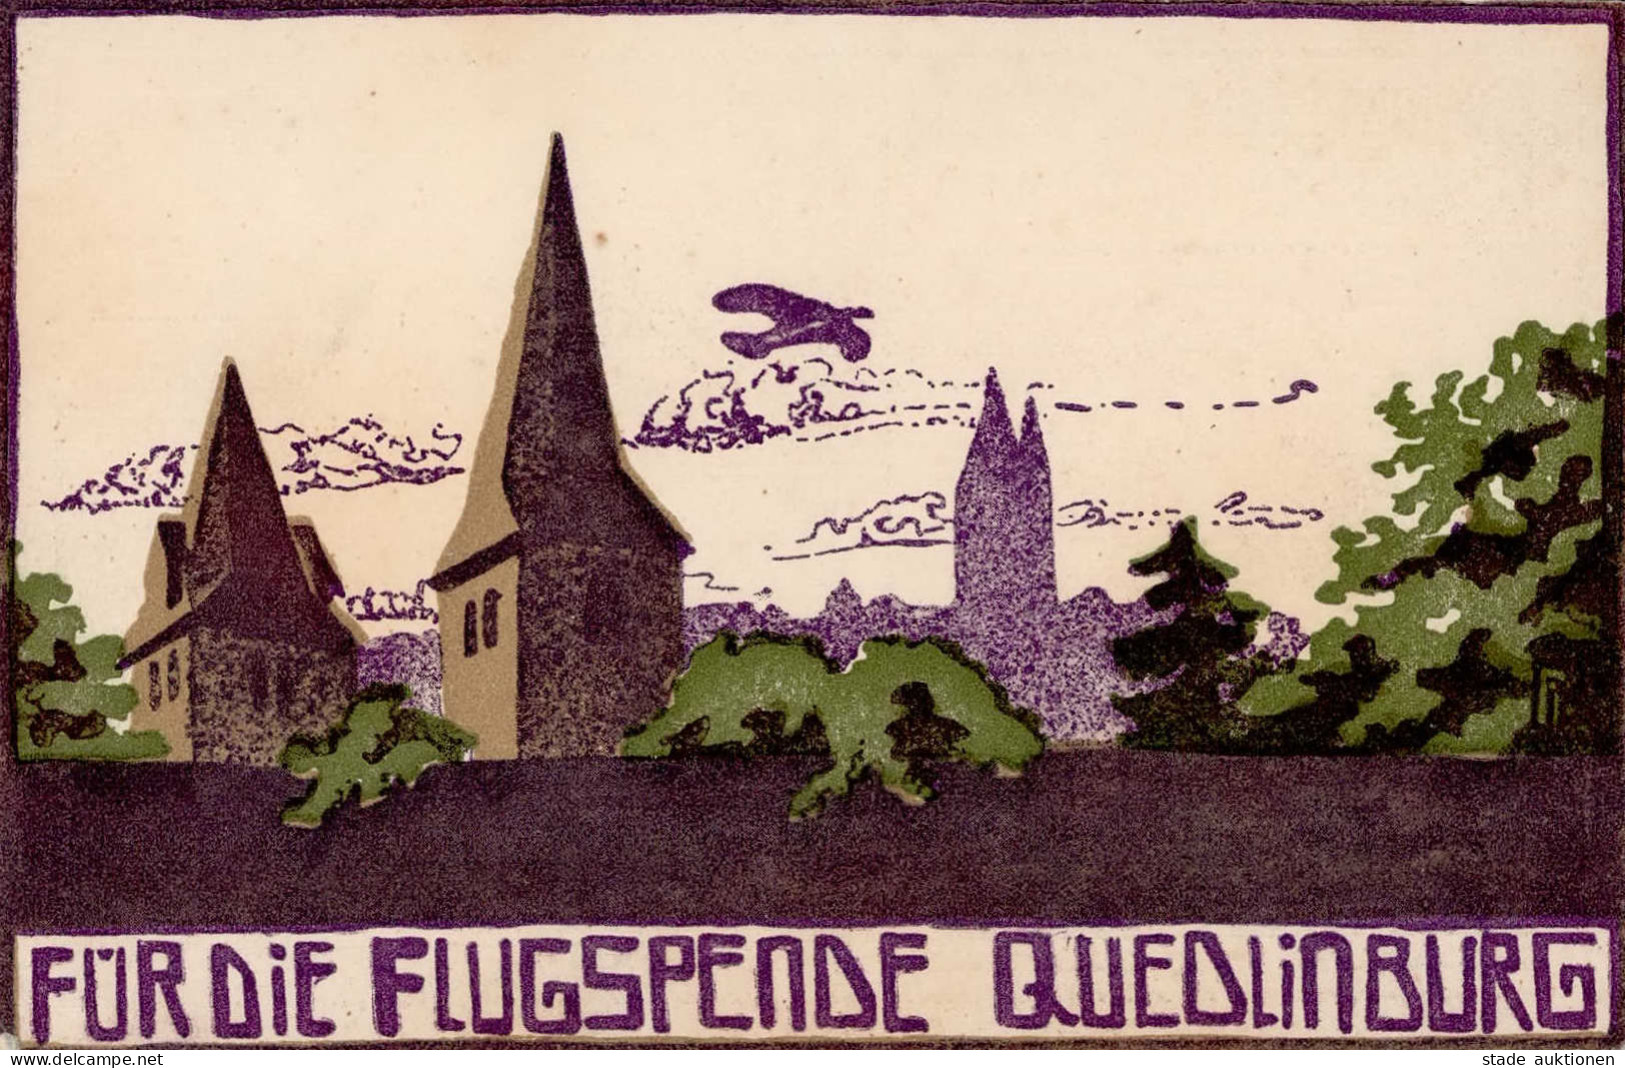 Flugereignis Quedlinburg Flugspendekarte Entworfen Milde, Dorothea I-II Aviation - War 1914-18